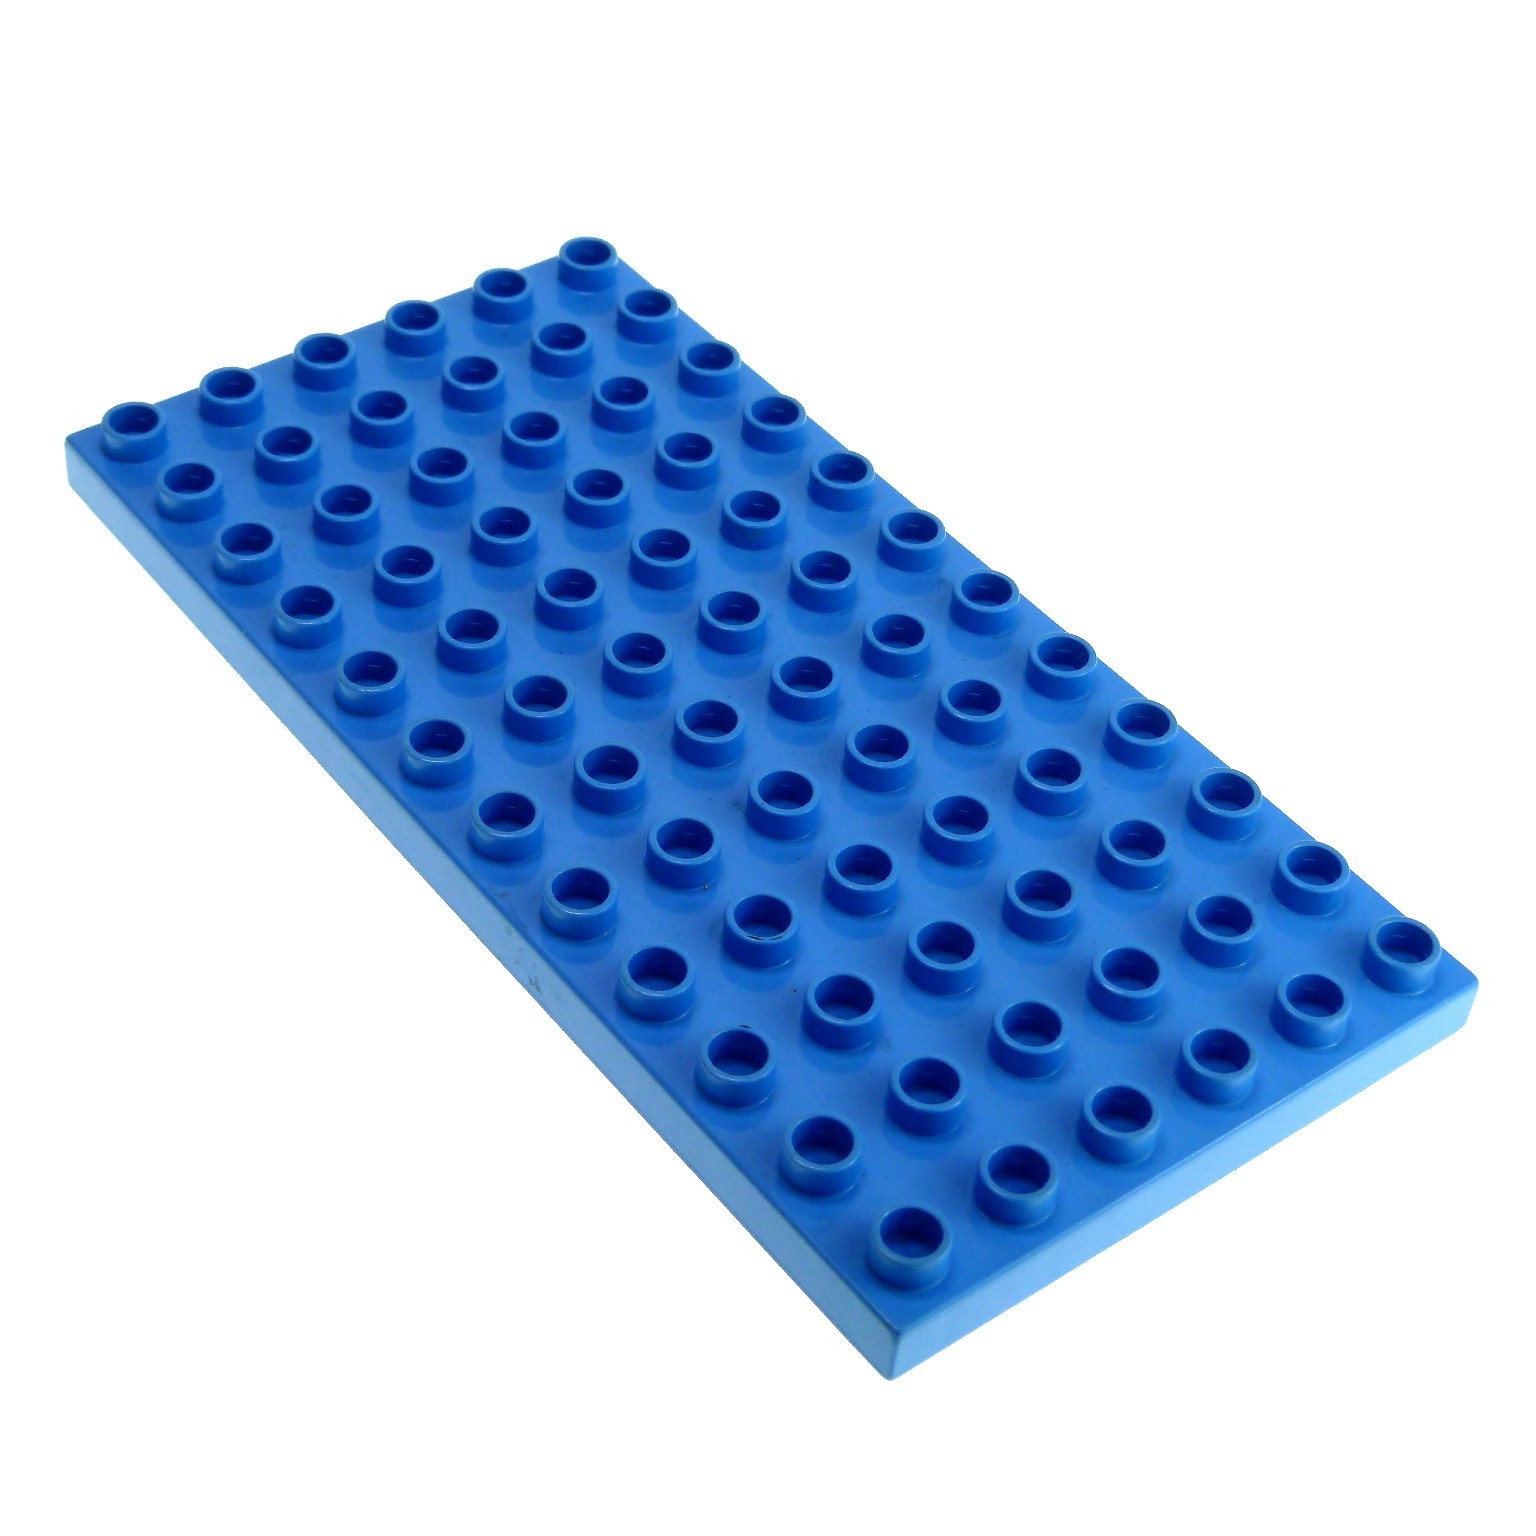 1 x Lego Duplo Bau Basic Platte medium hell blau 12 x 6 Noppen 6x12 Grundplatte